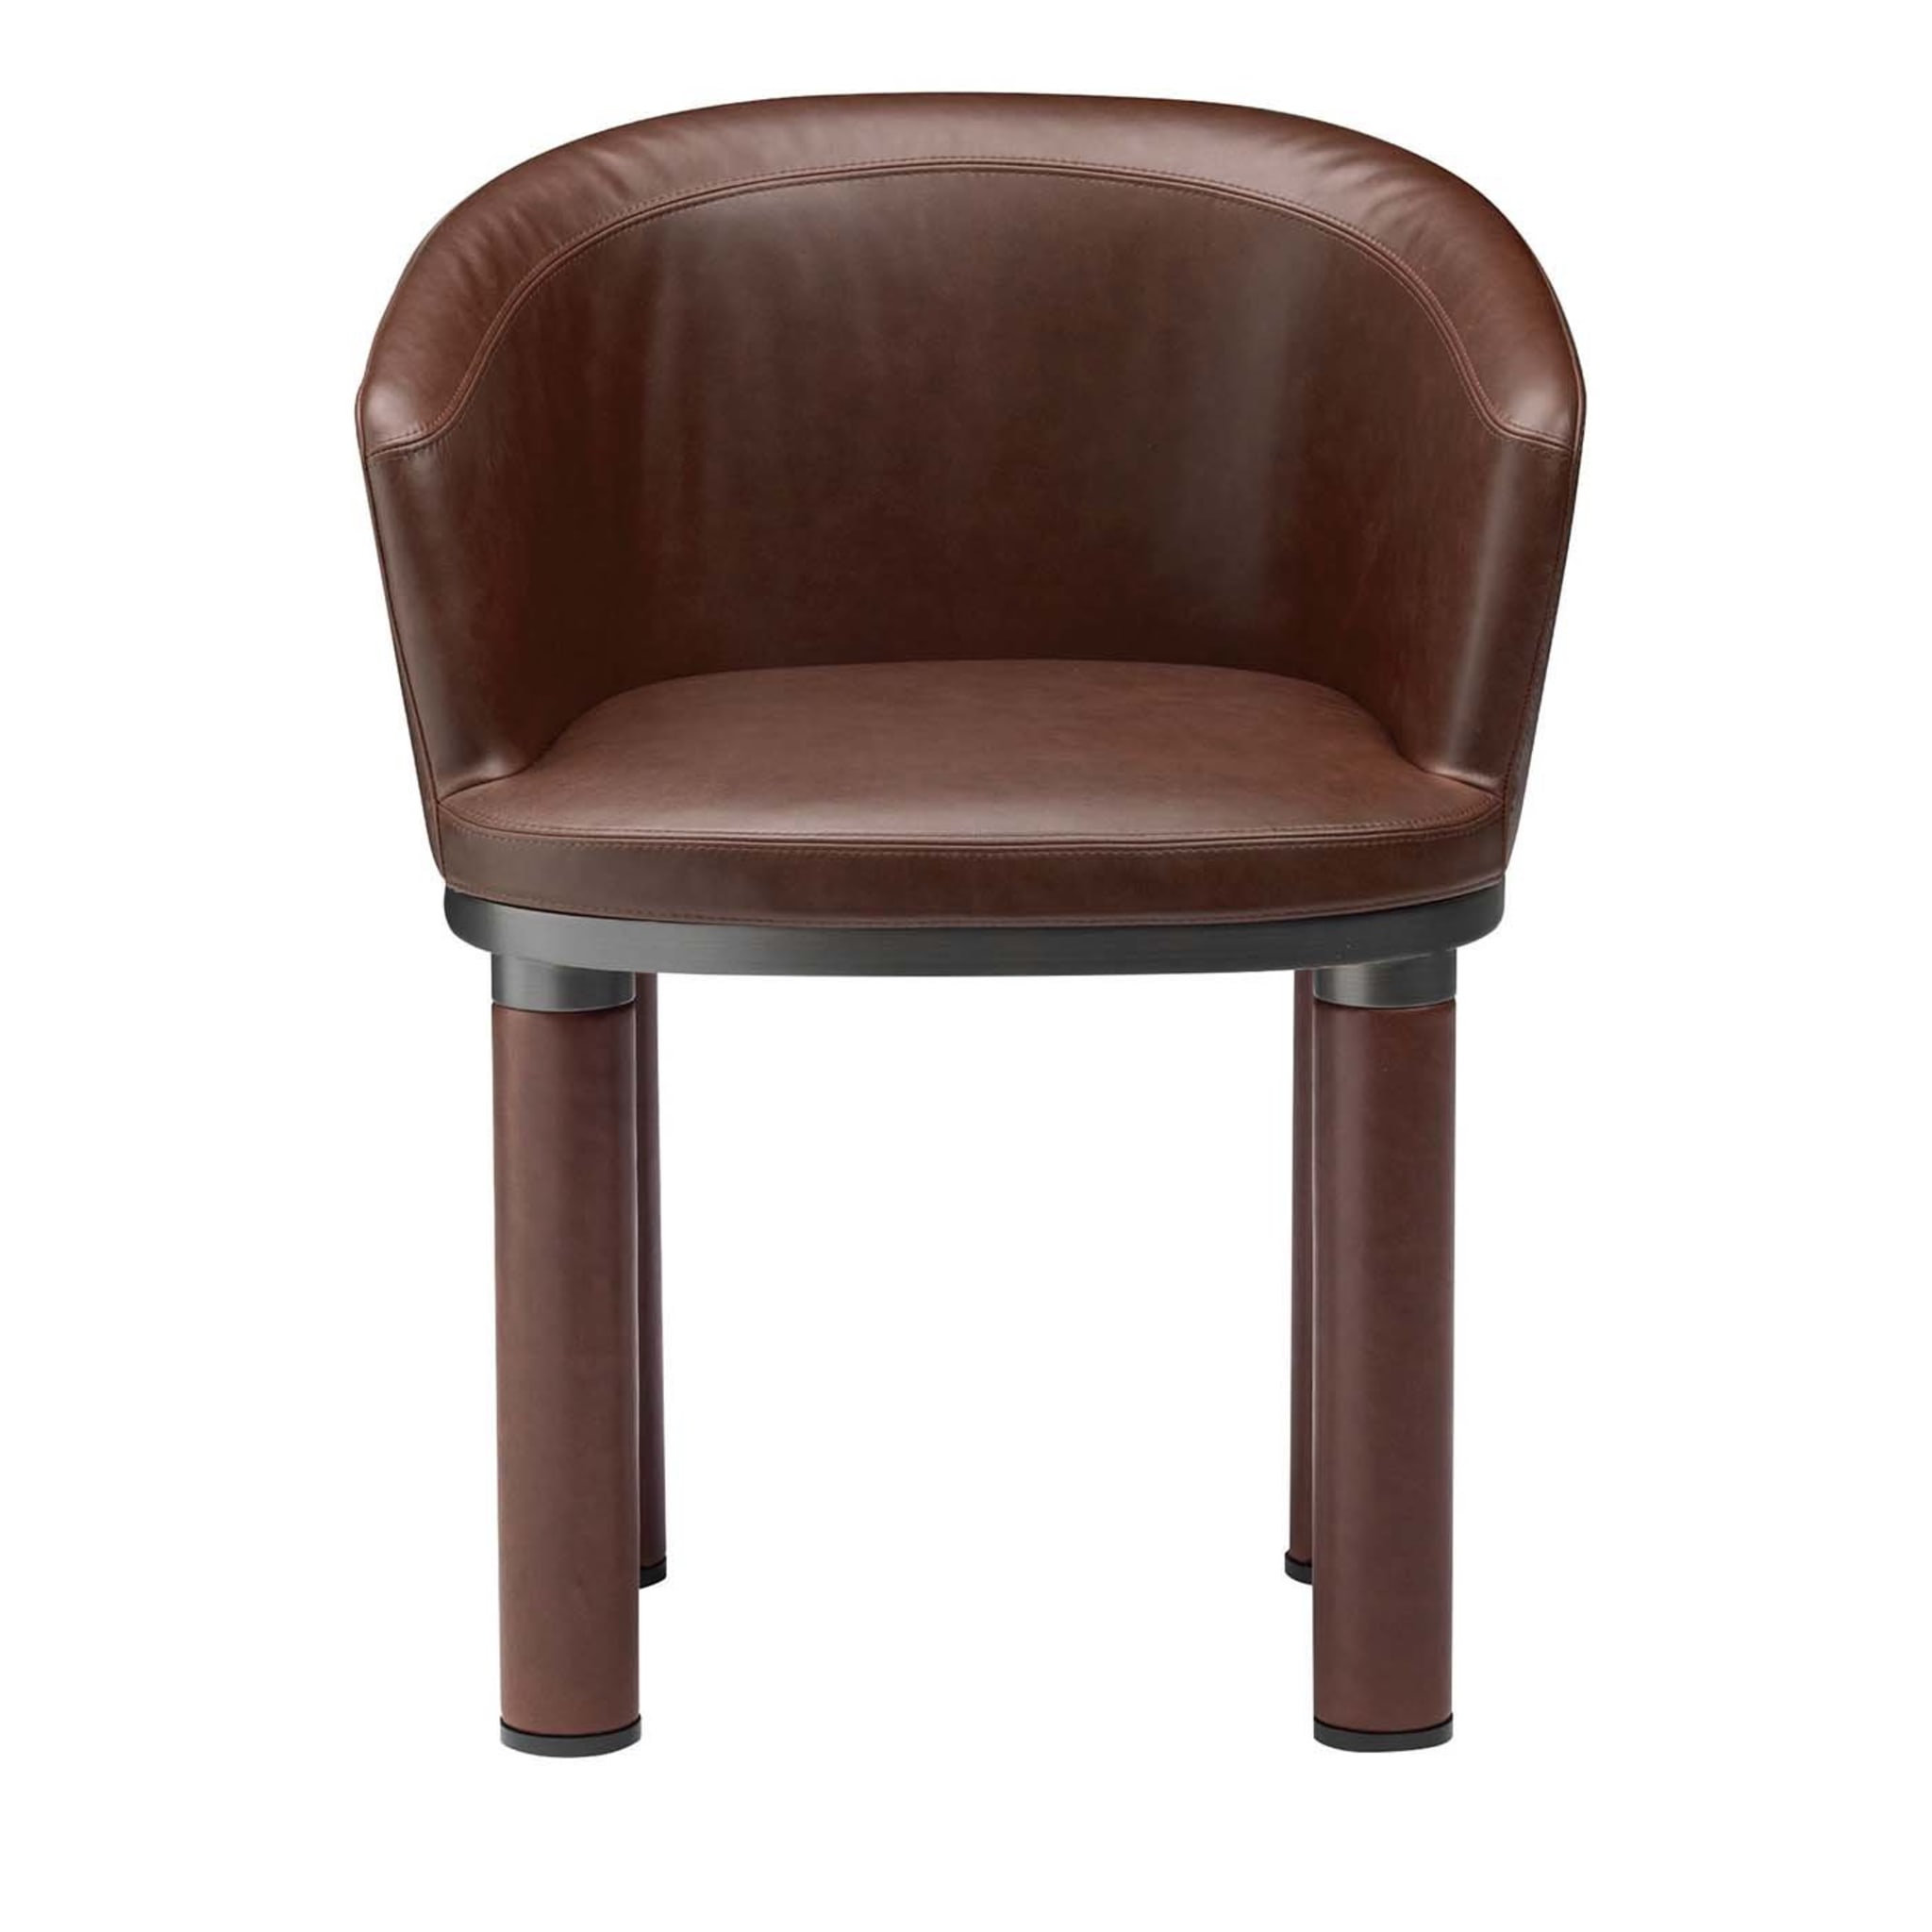 Bold Brown chair - Main view